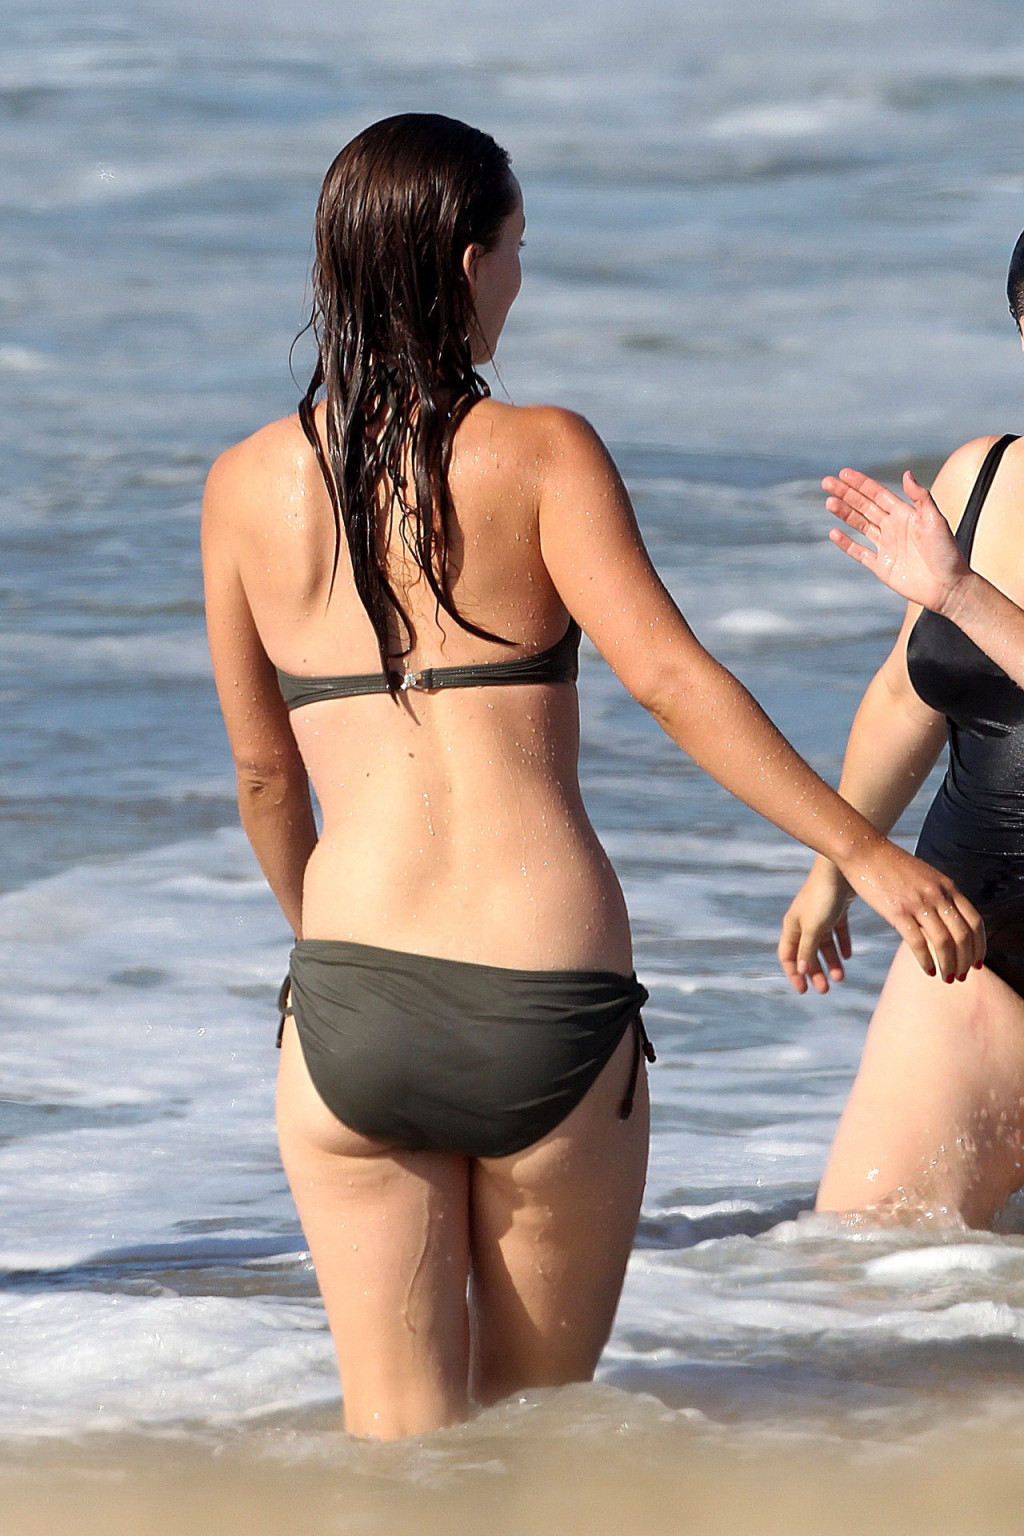 Olivia Wilde se ve muy sexy en bikini mojado en la playa
 #75335385